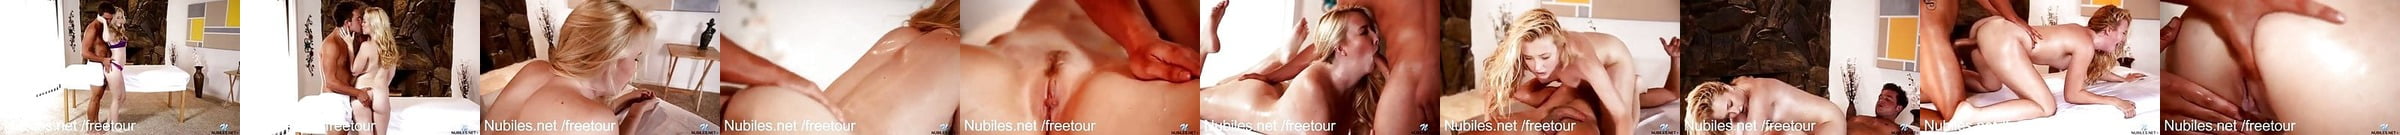 Vidéos Porno Amateur Massage Vidéos Porno Xhamster